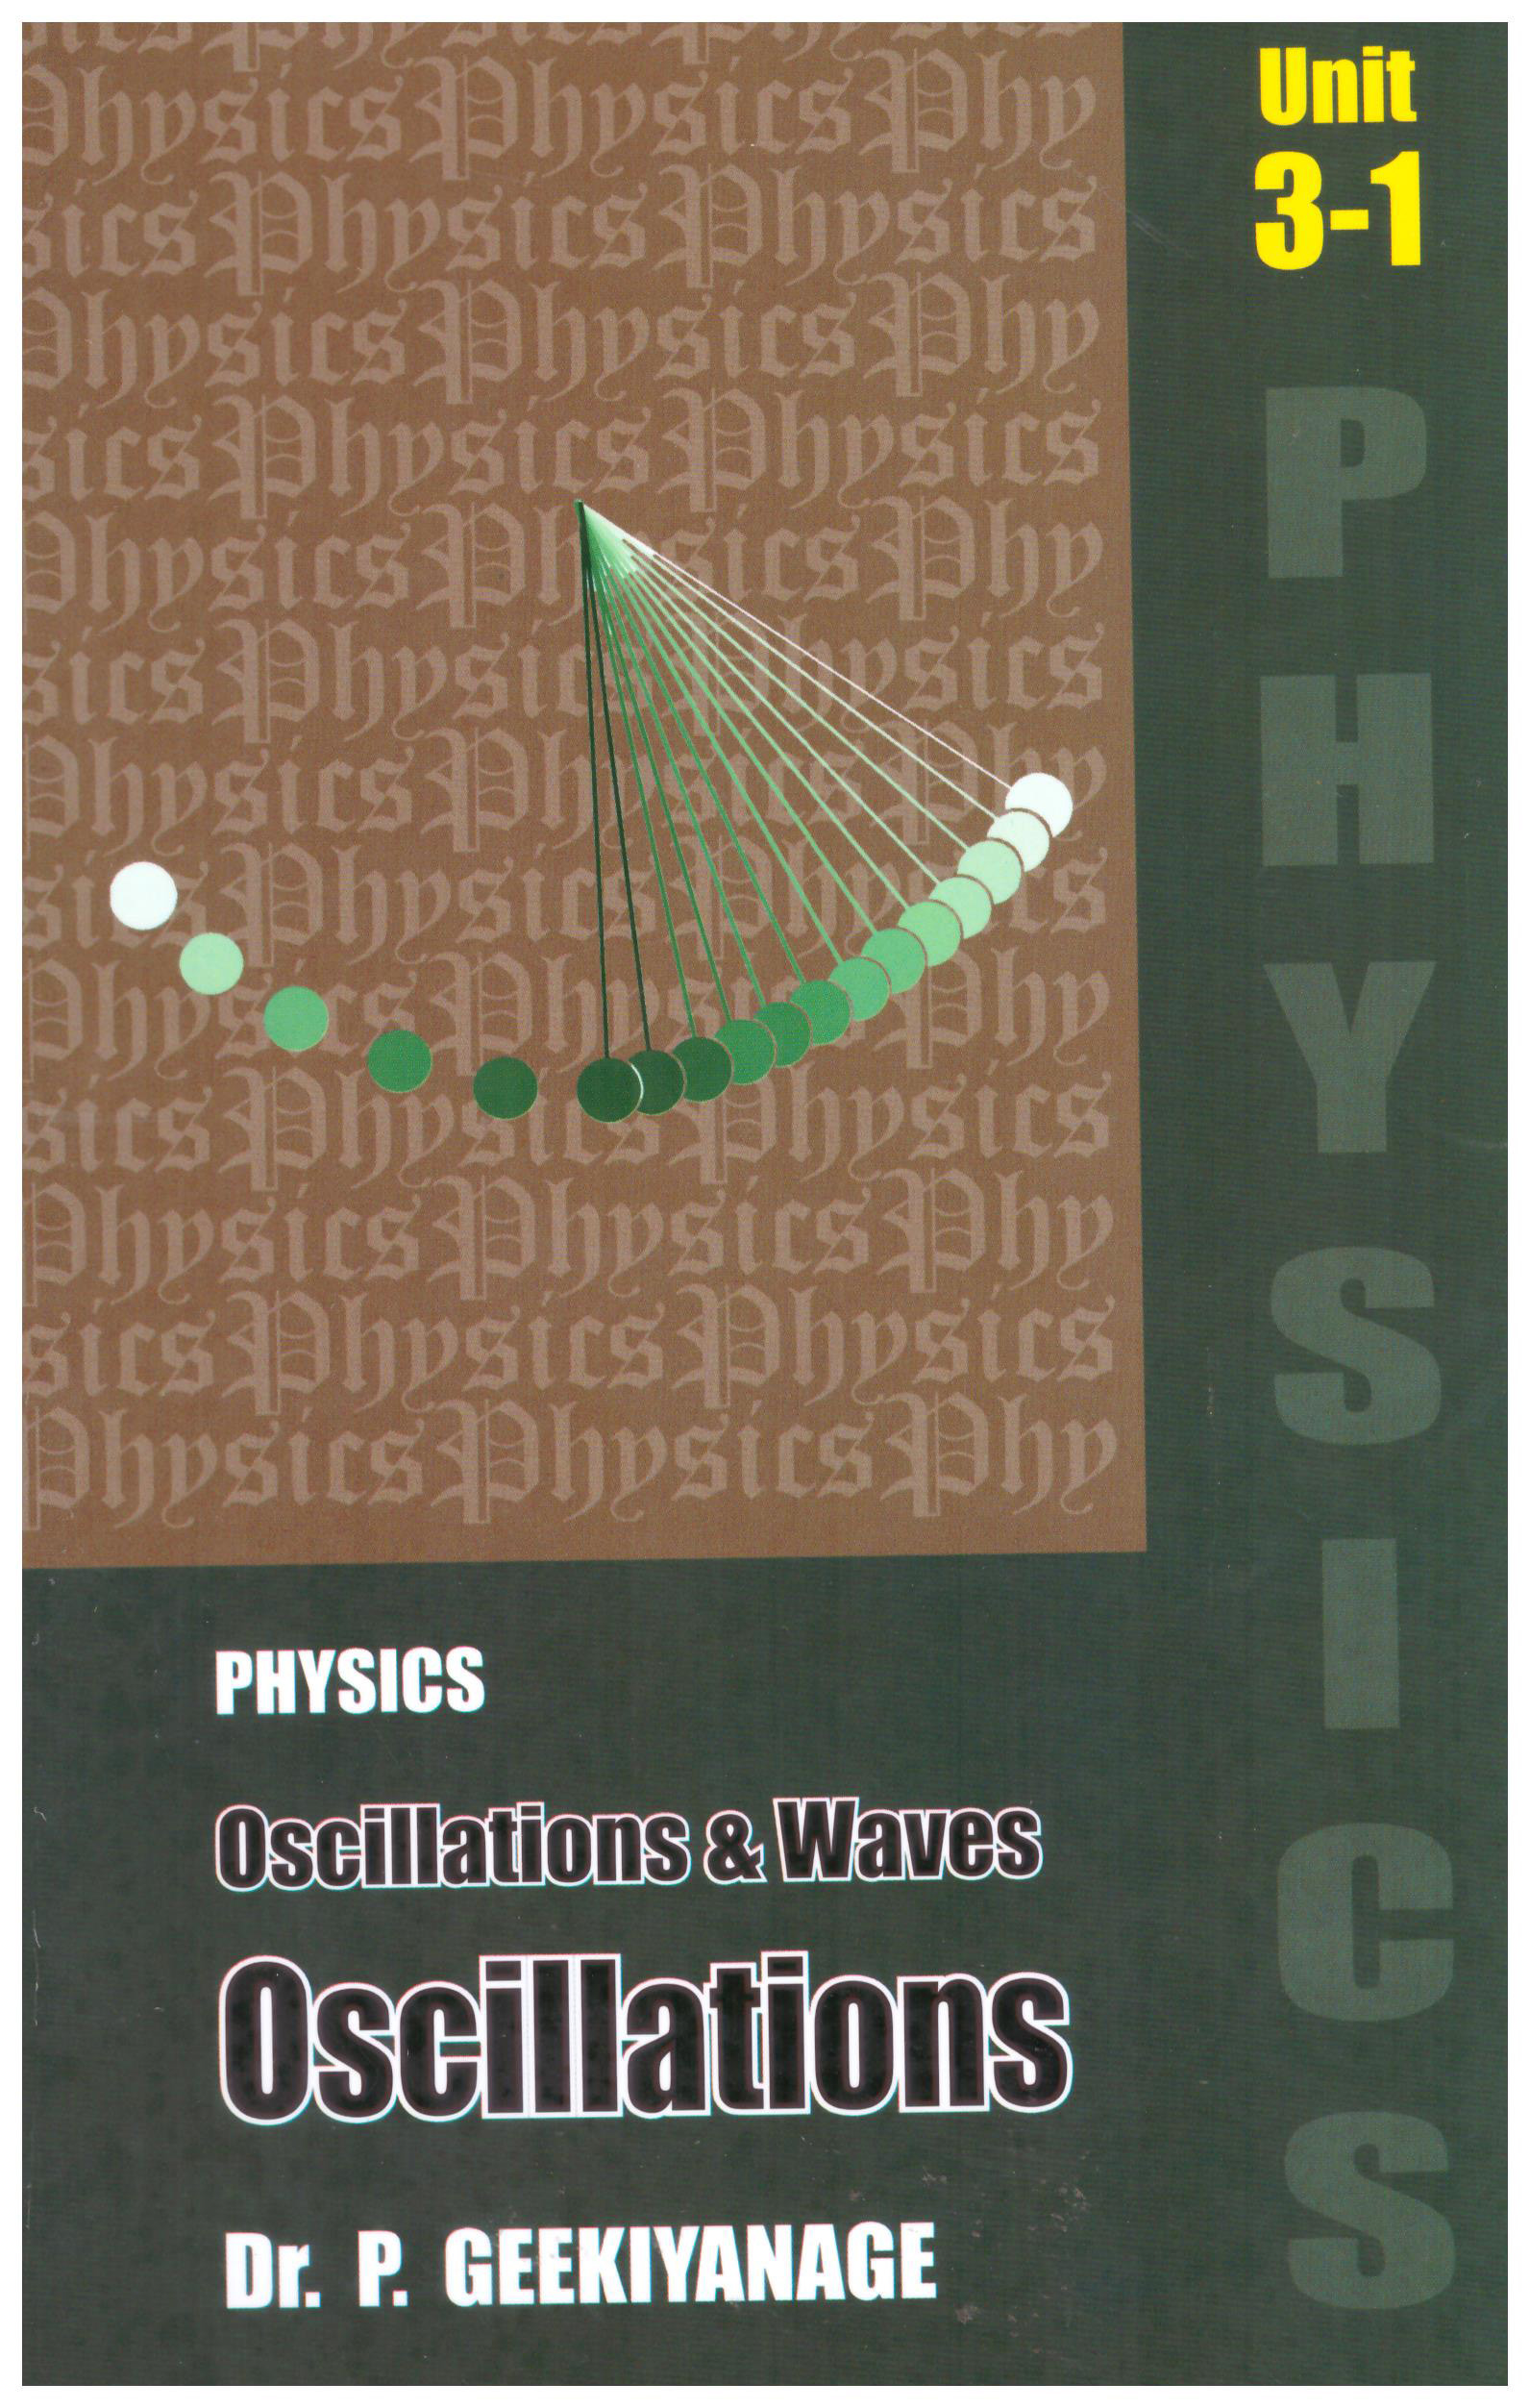 Physics Oscillations and Waves Oscillations Unit 3-1